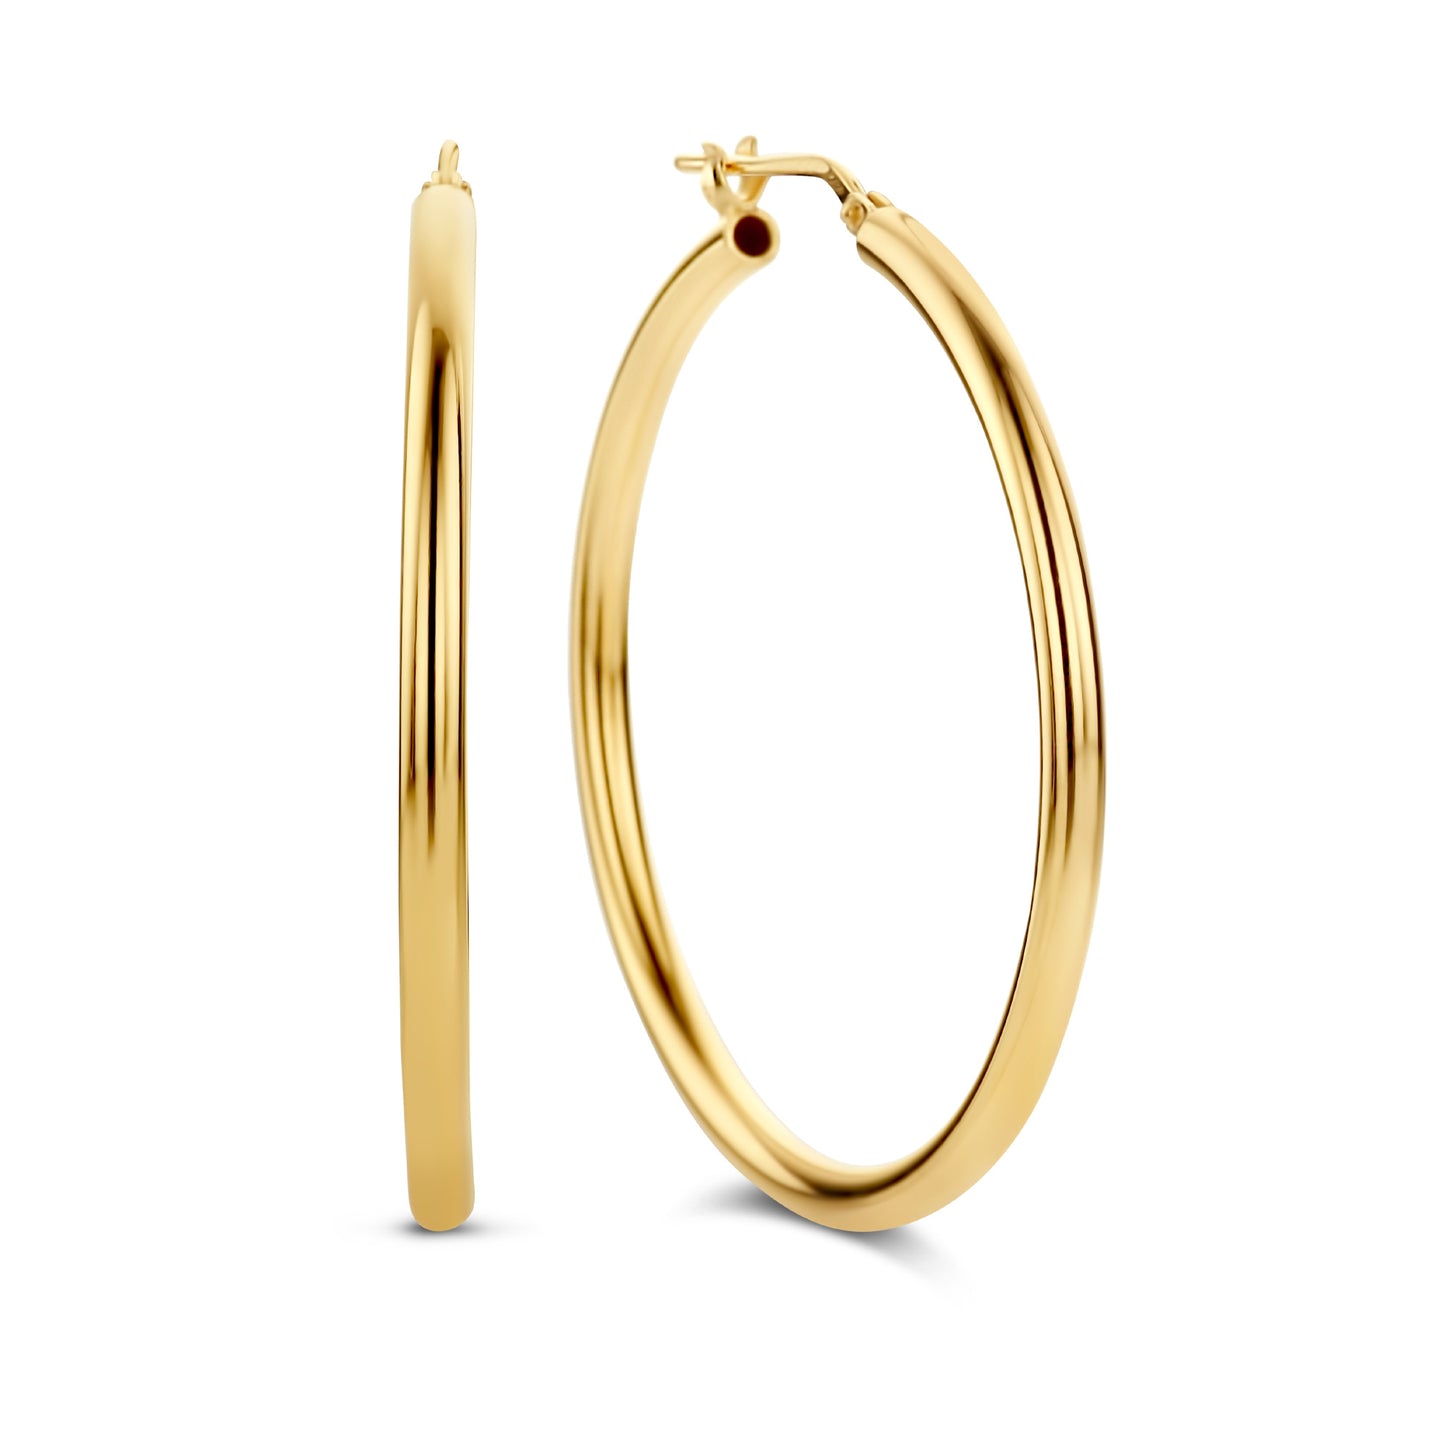 Bibbiena Poppi Casentino 925 sterling silver gold plated hoop earrings with 14 karat gold plating